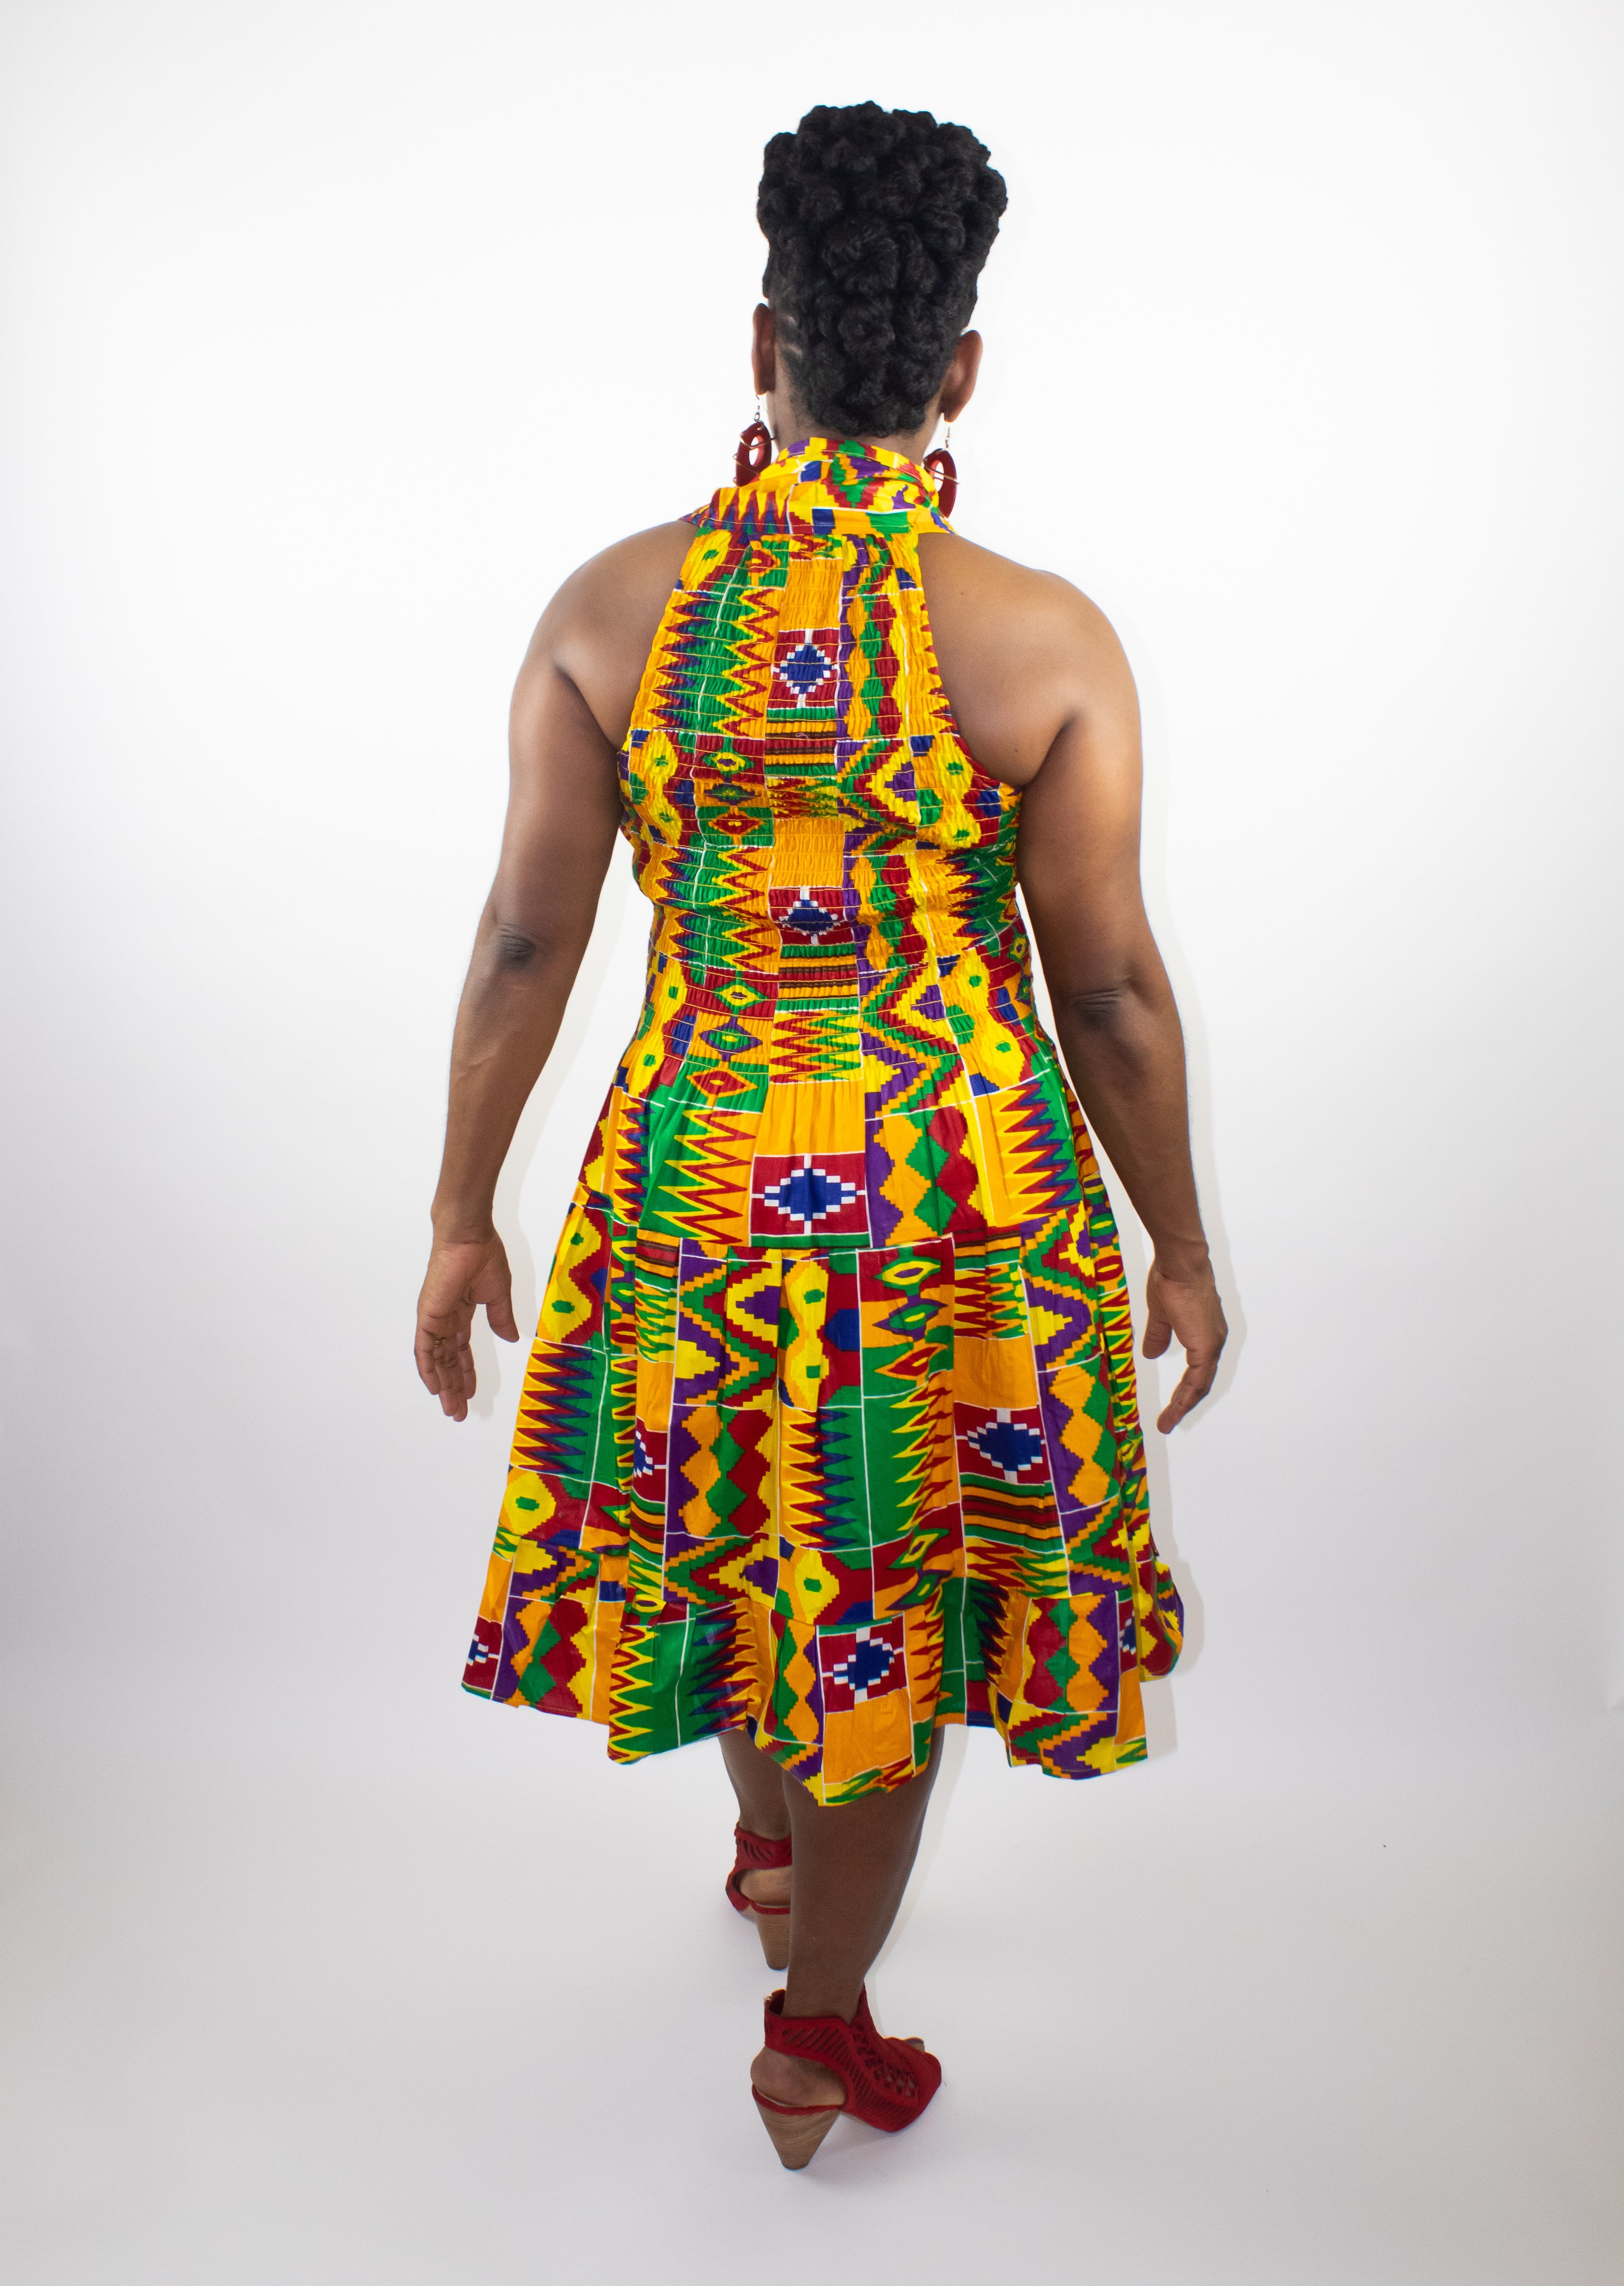 Knee length African Kente Racerback Dress